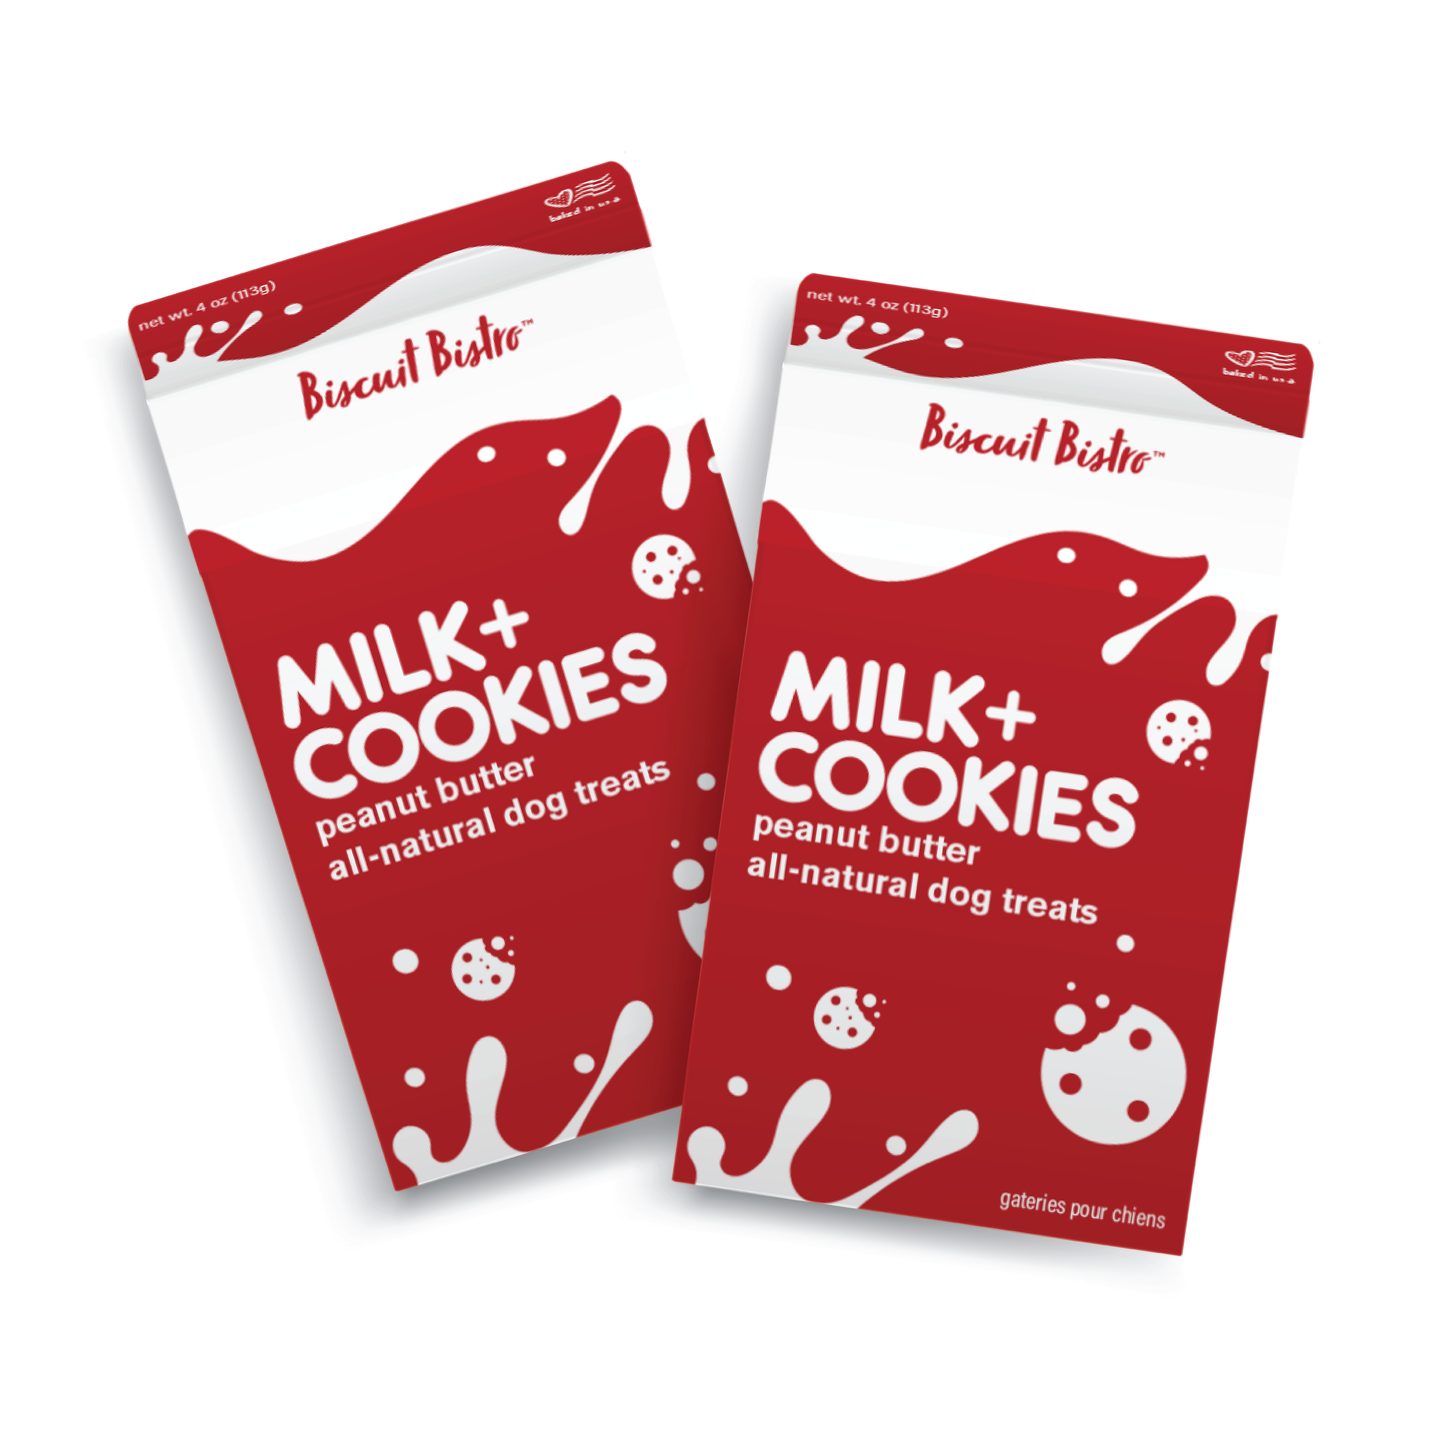 Milk + Cookies - Peanut Butter Dog Treats - 4 oz